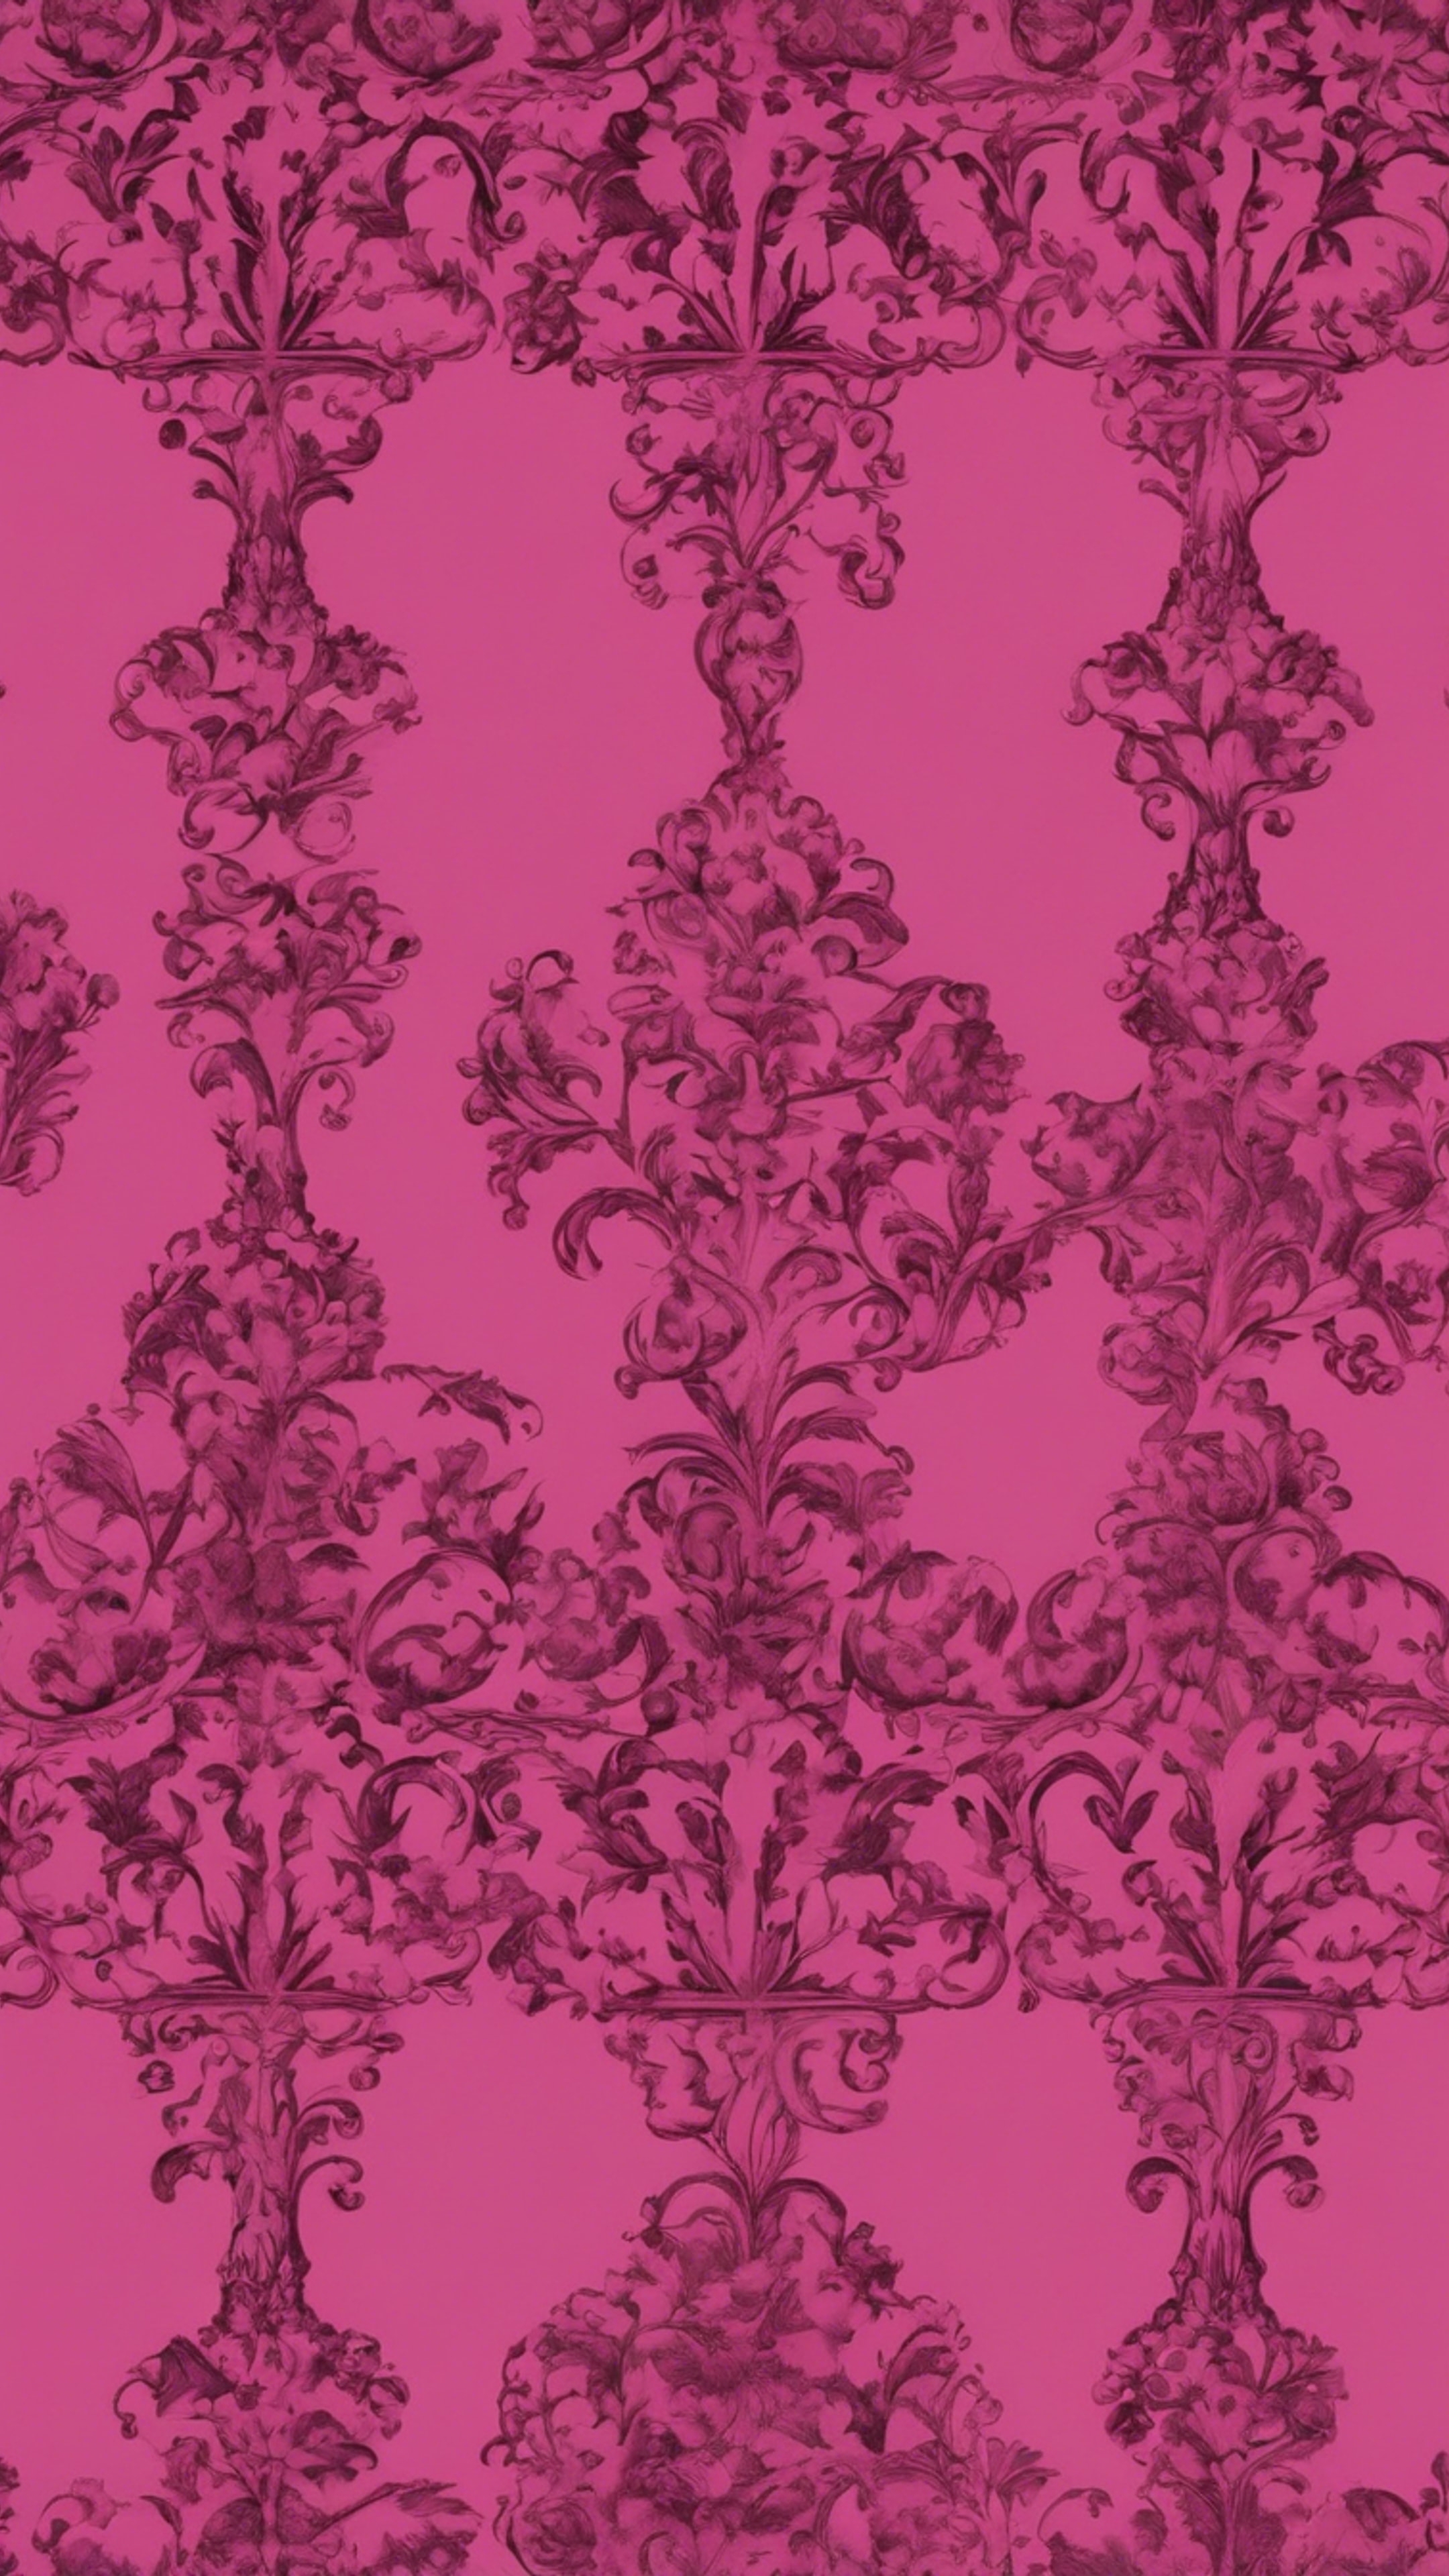 A dark pink Gothic background with baroque patterns. 牆紙[5770fecf2152499e8904]